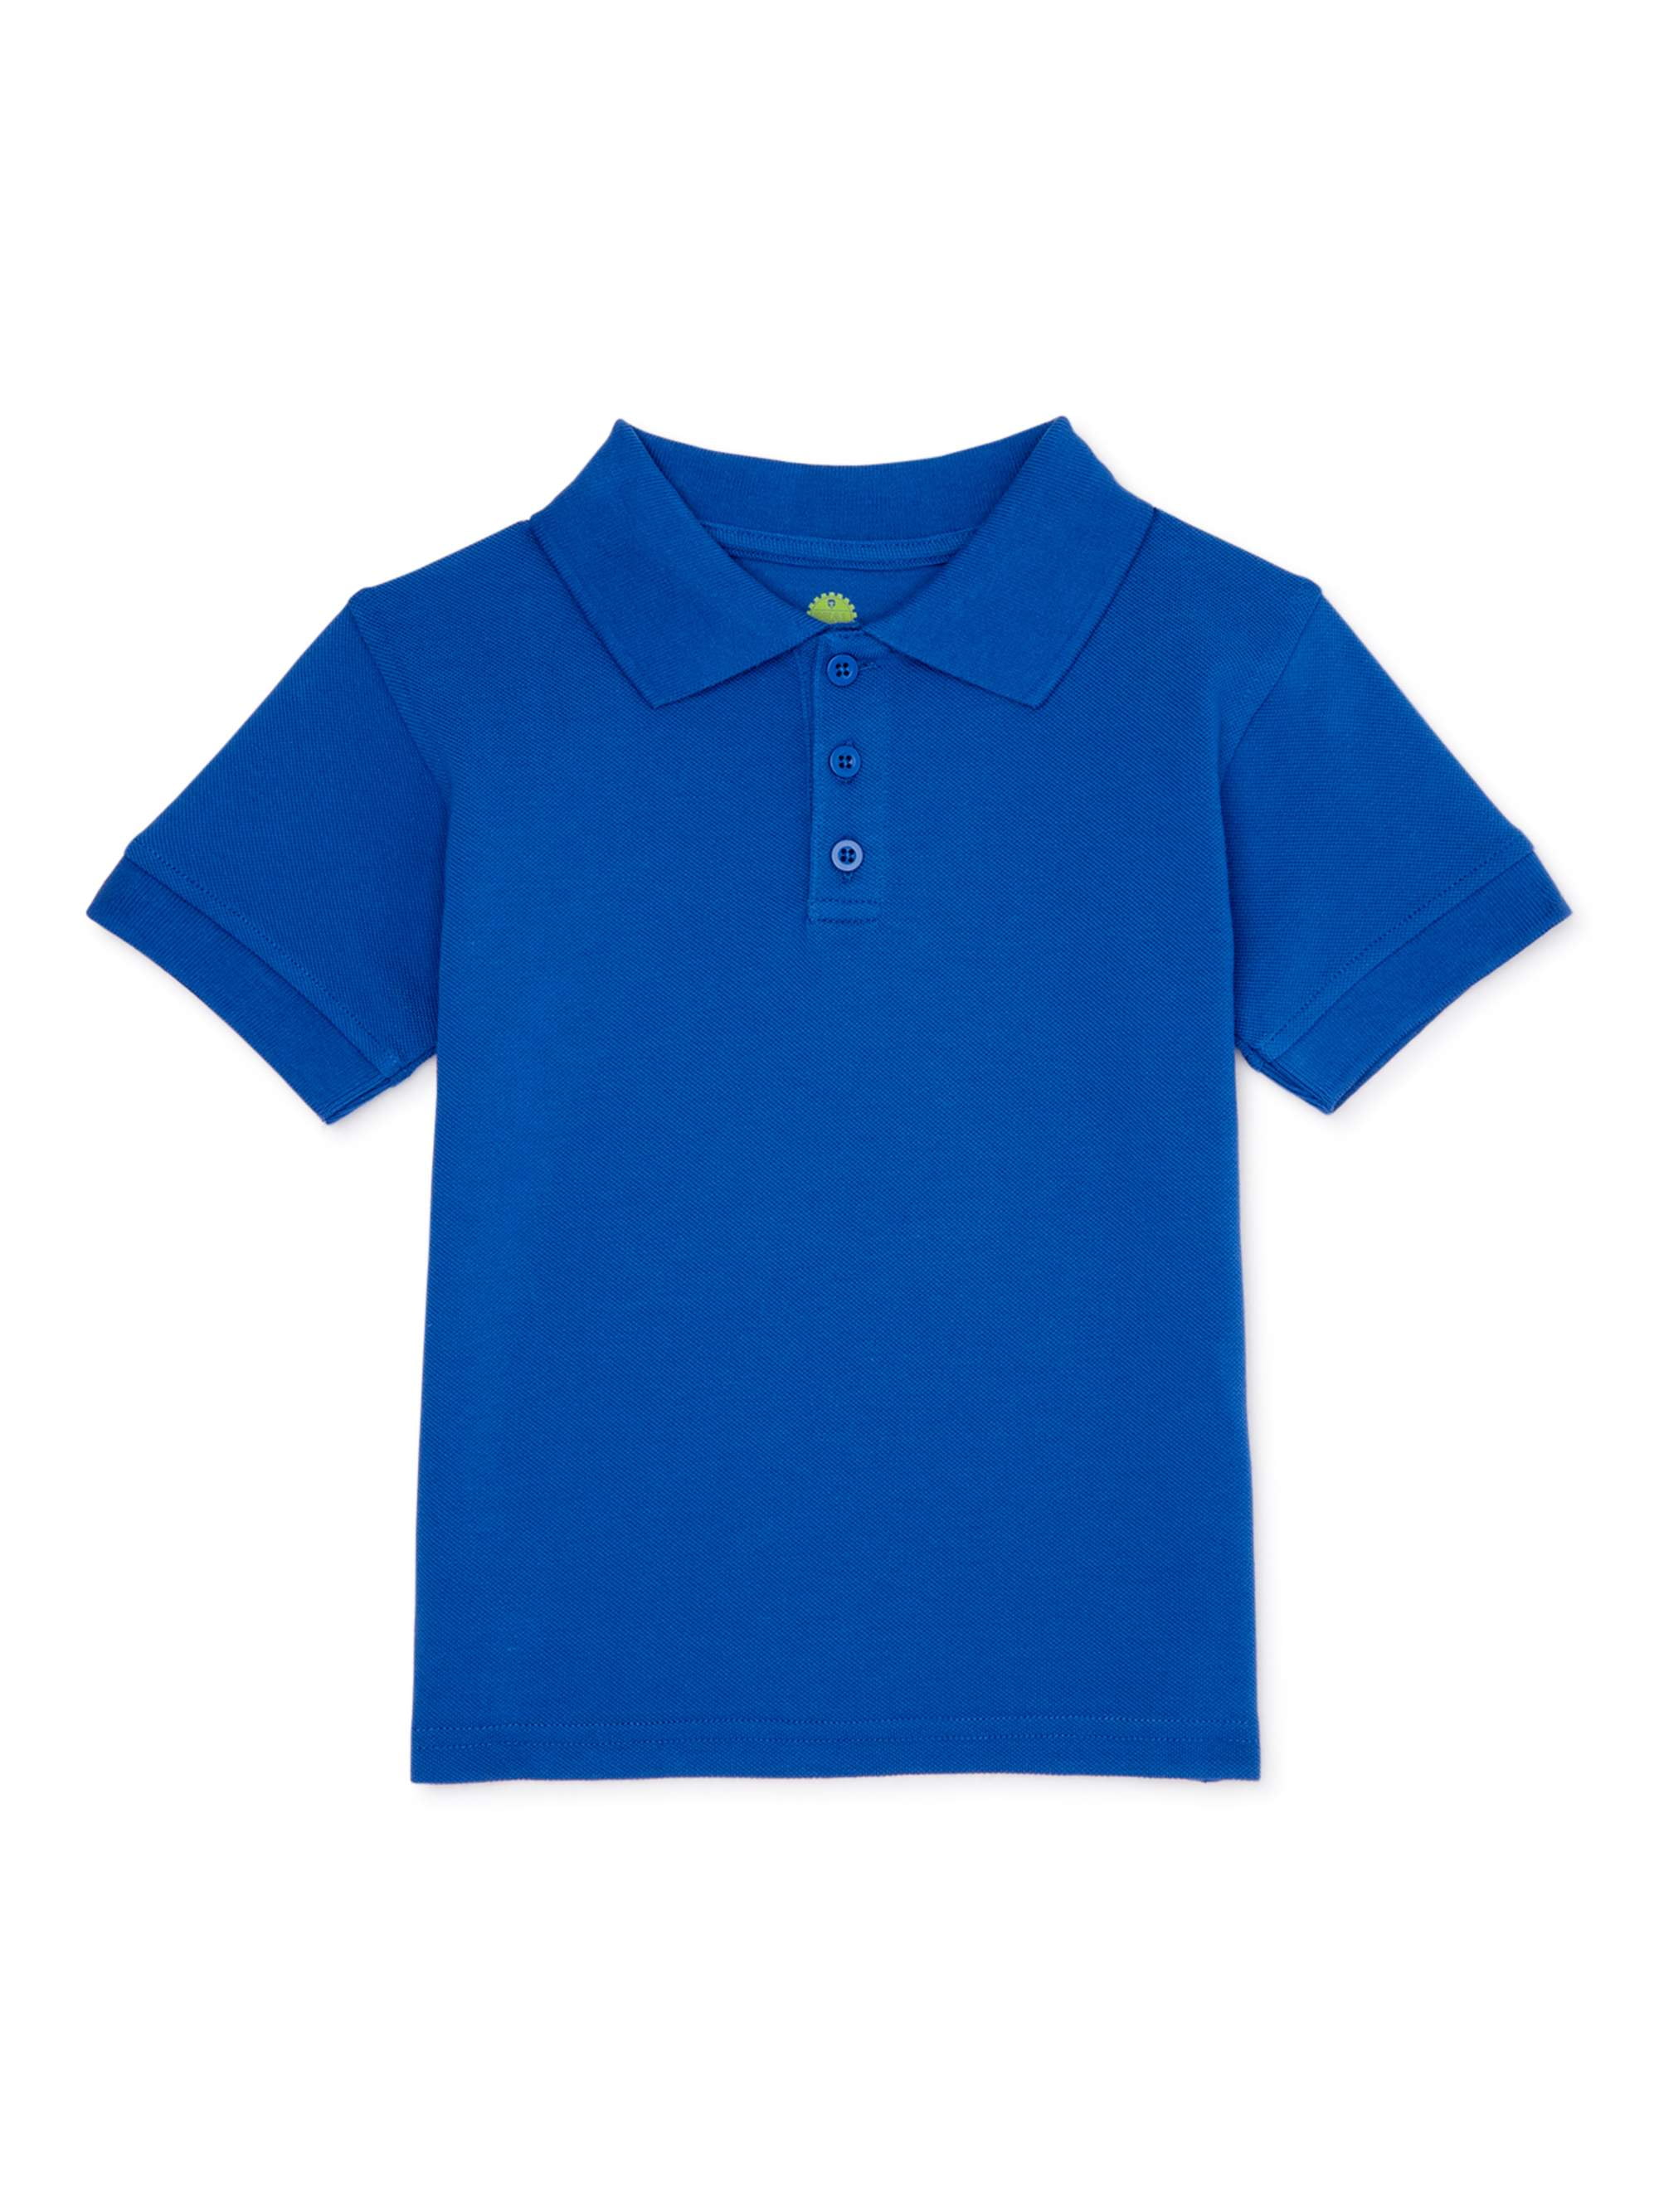 School Uniform Short Sleeve Unisex Pique Polo